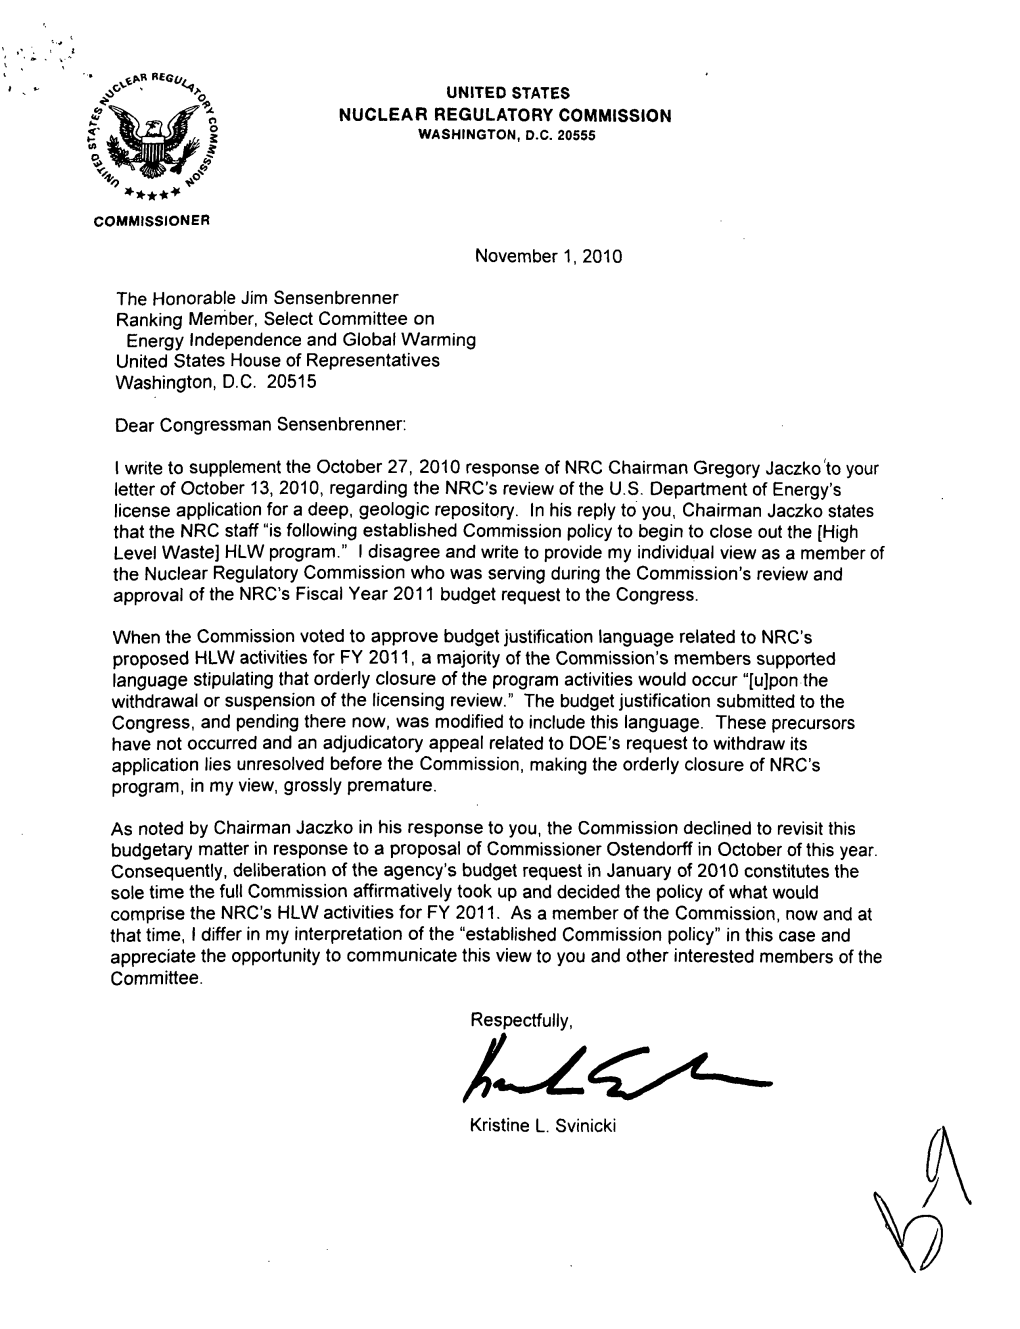 Letter from Commissioner Svinicki to Congressman Jim